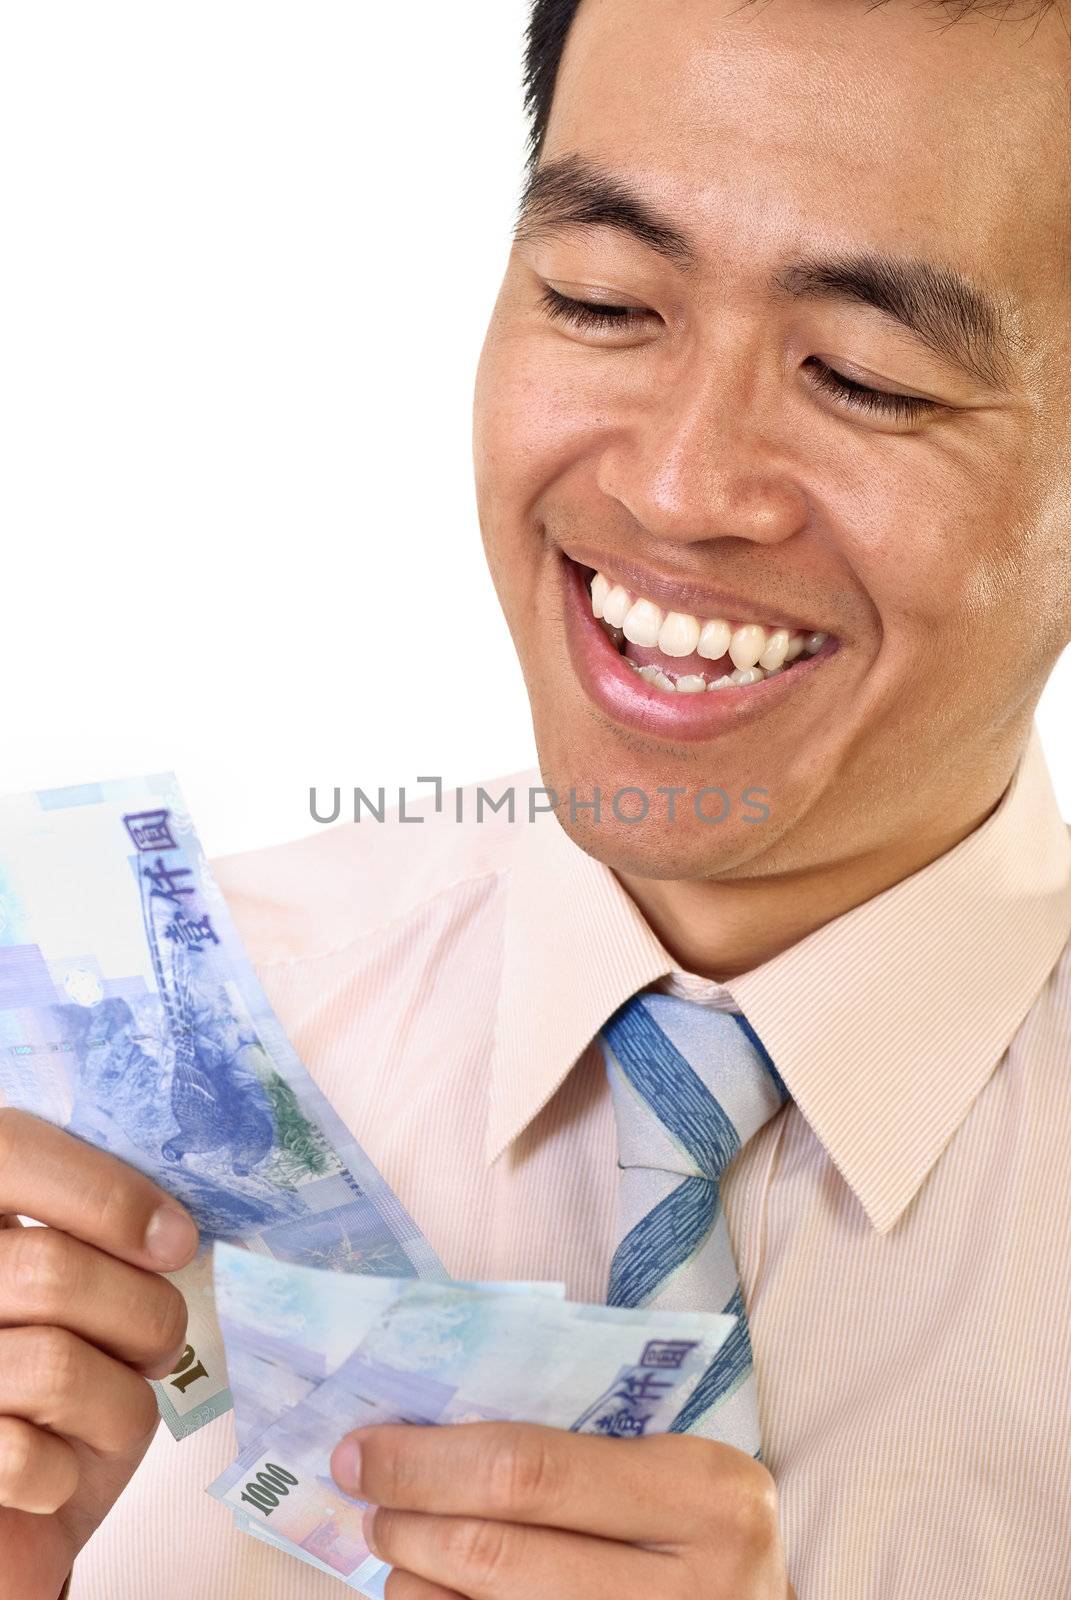 Make money concept of mature business man, closeup portrait with smiling face.